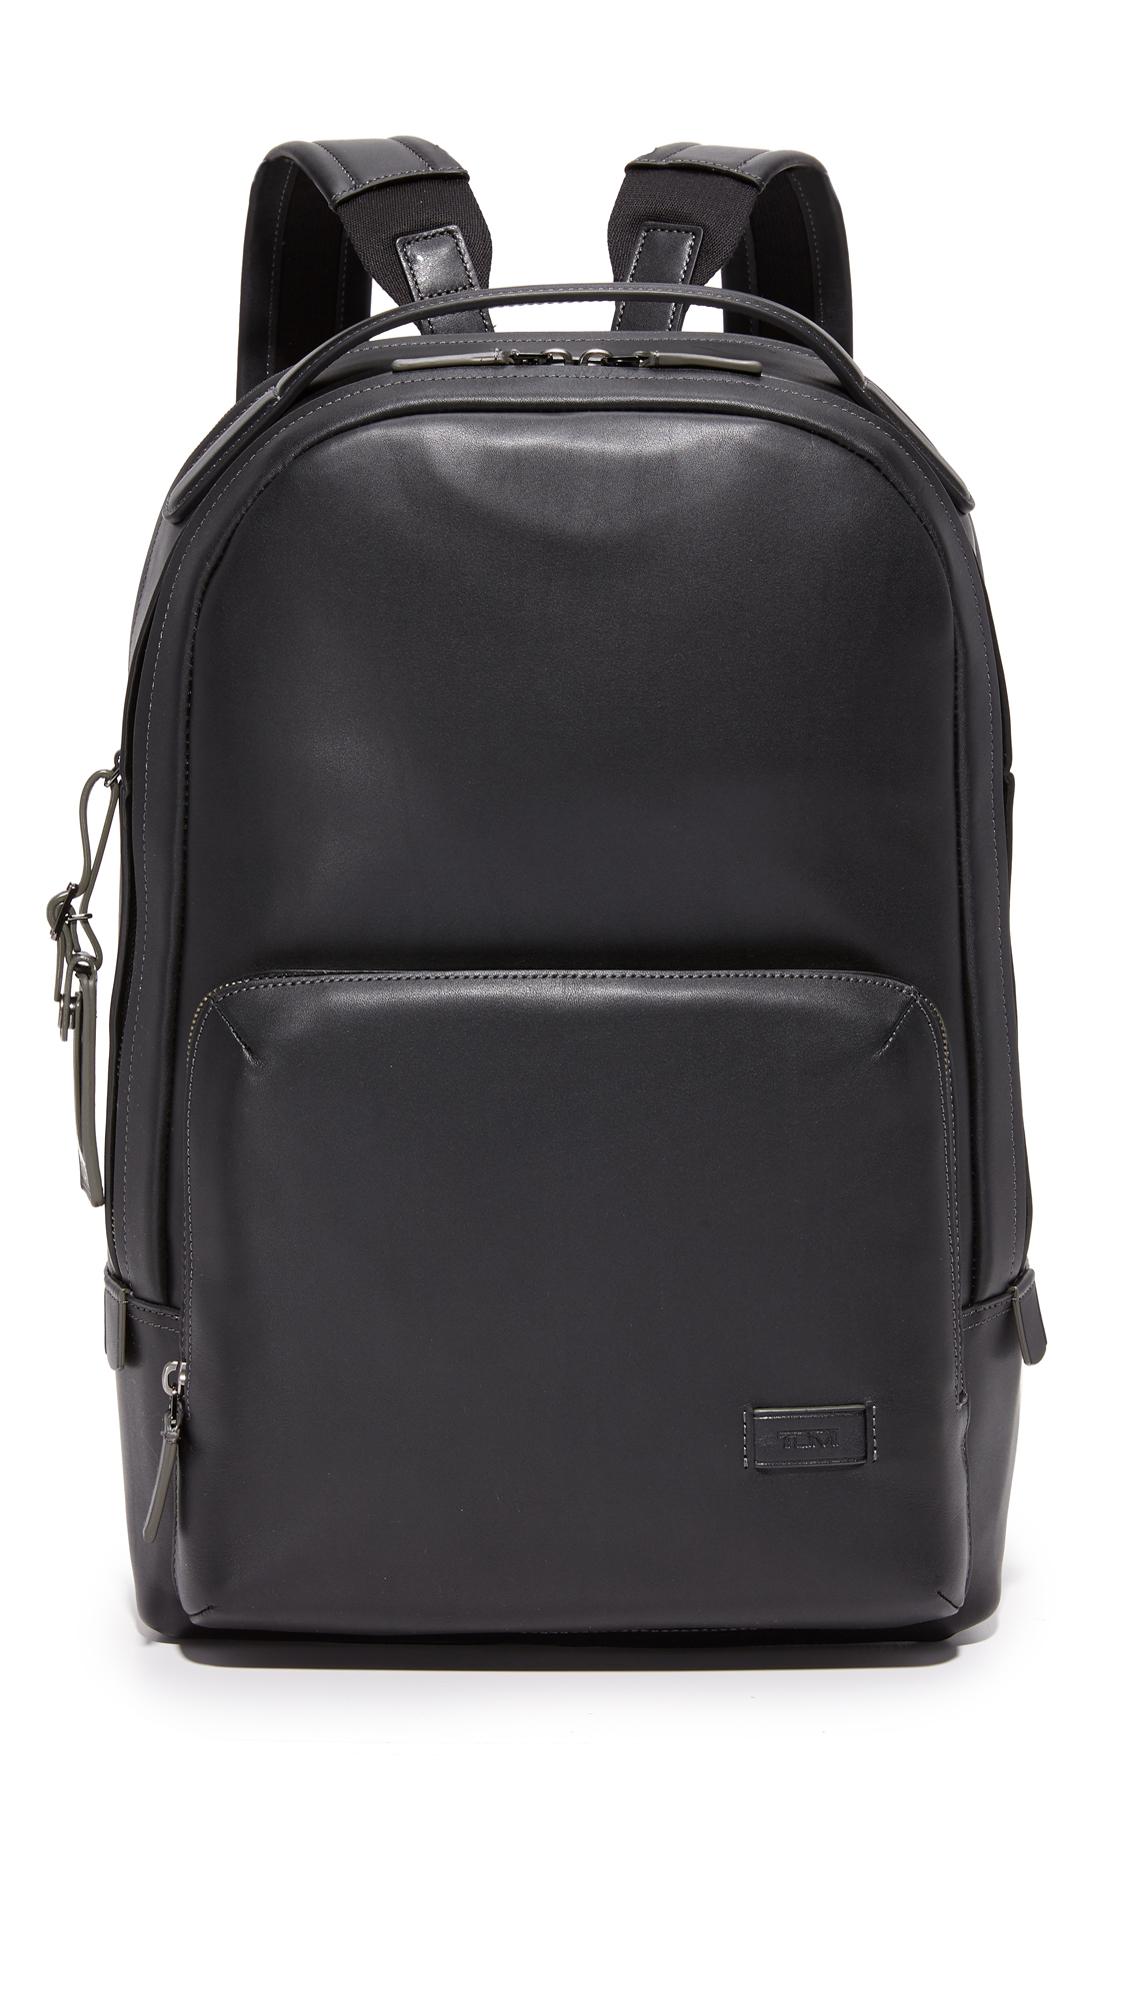 Lyst - Tumi Harrison Leather Webster Backpack in Black for Men